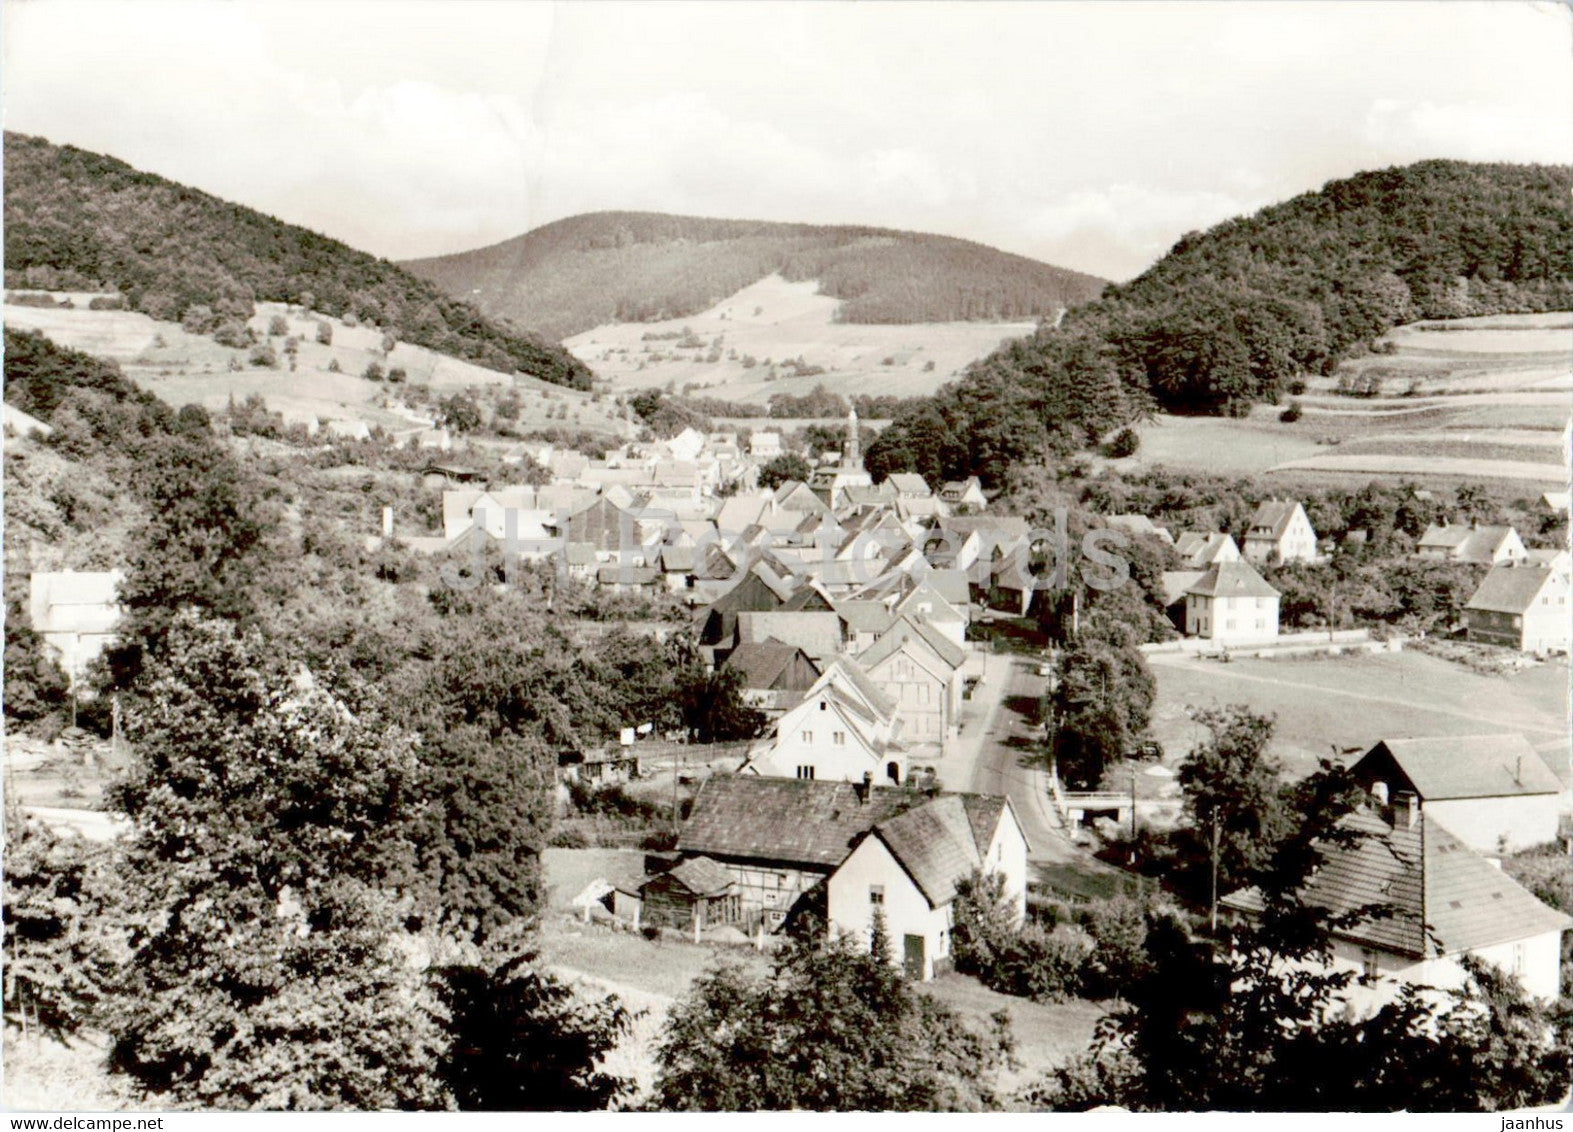 Erholungsort Schnellbach - Thur Wald - Germany DDR - used - JH Postcards